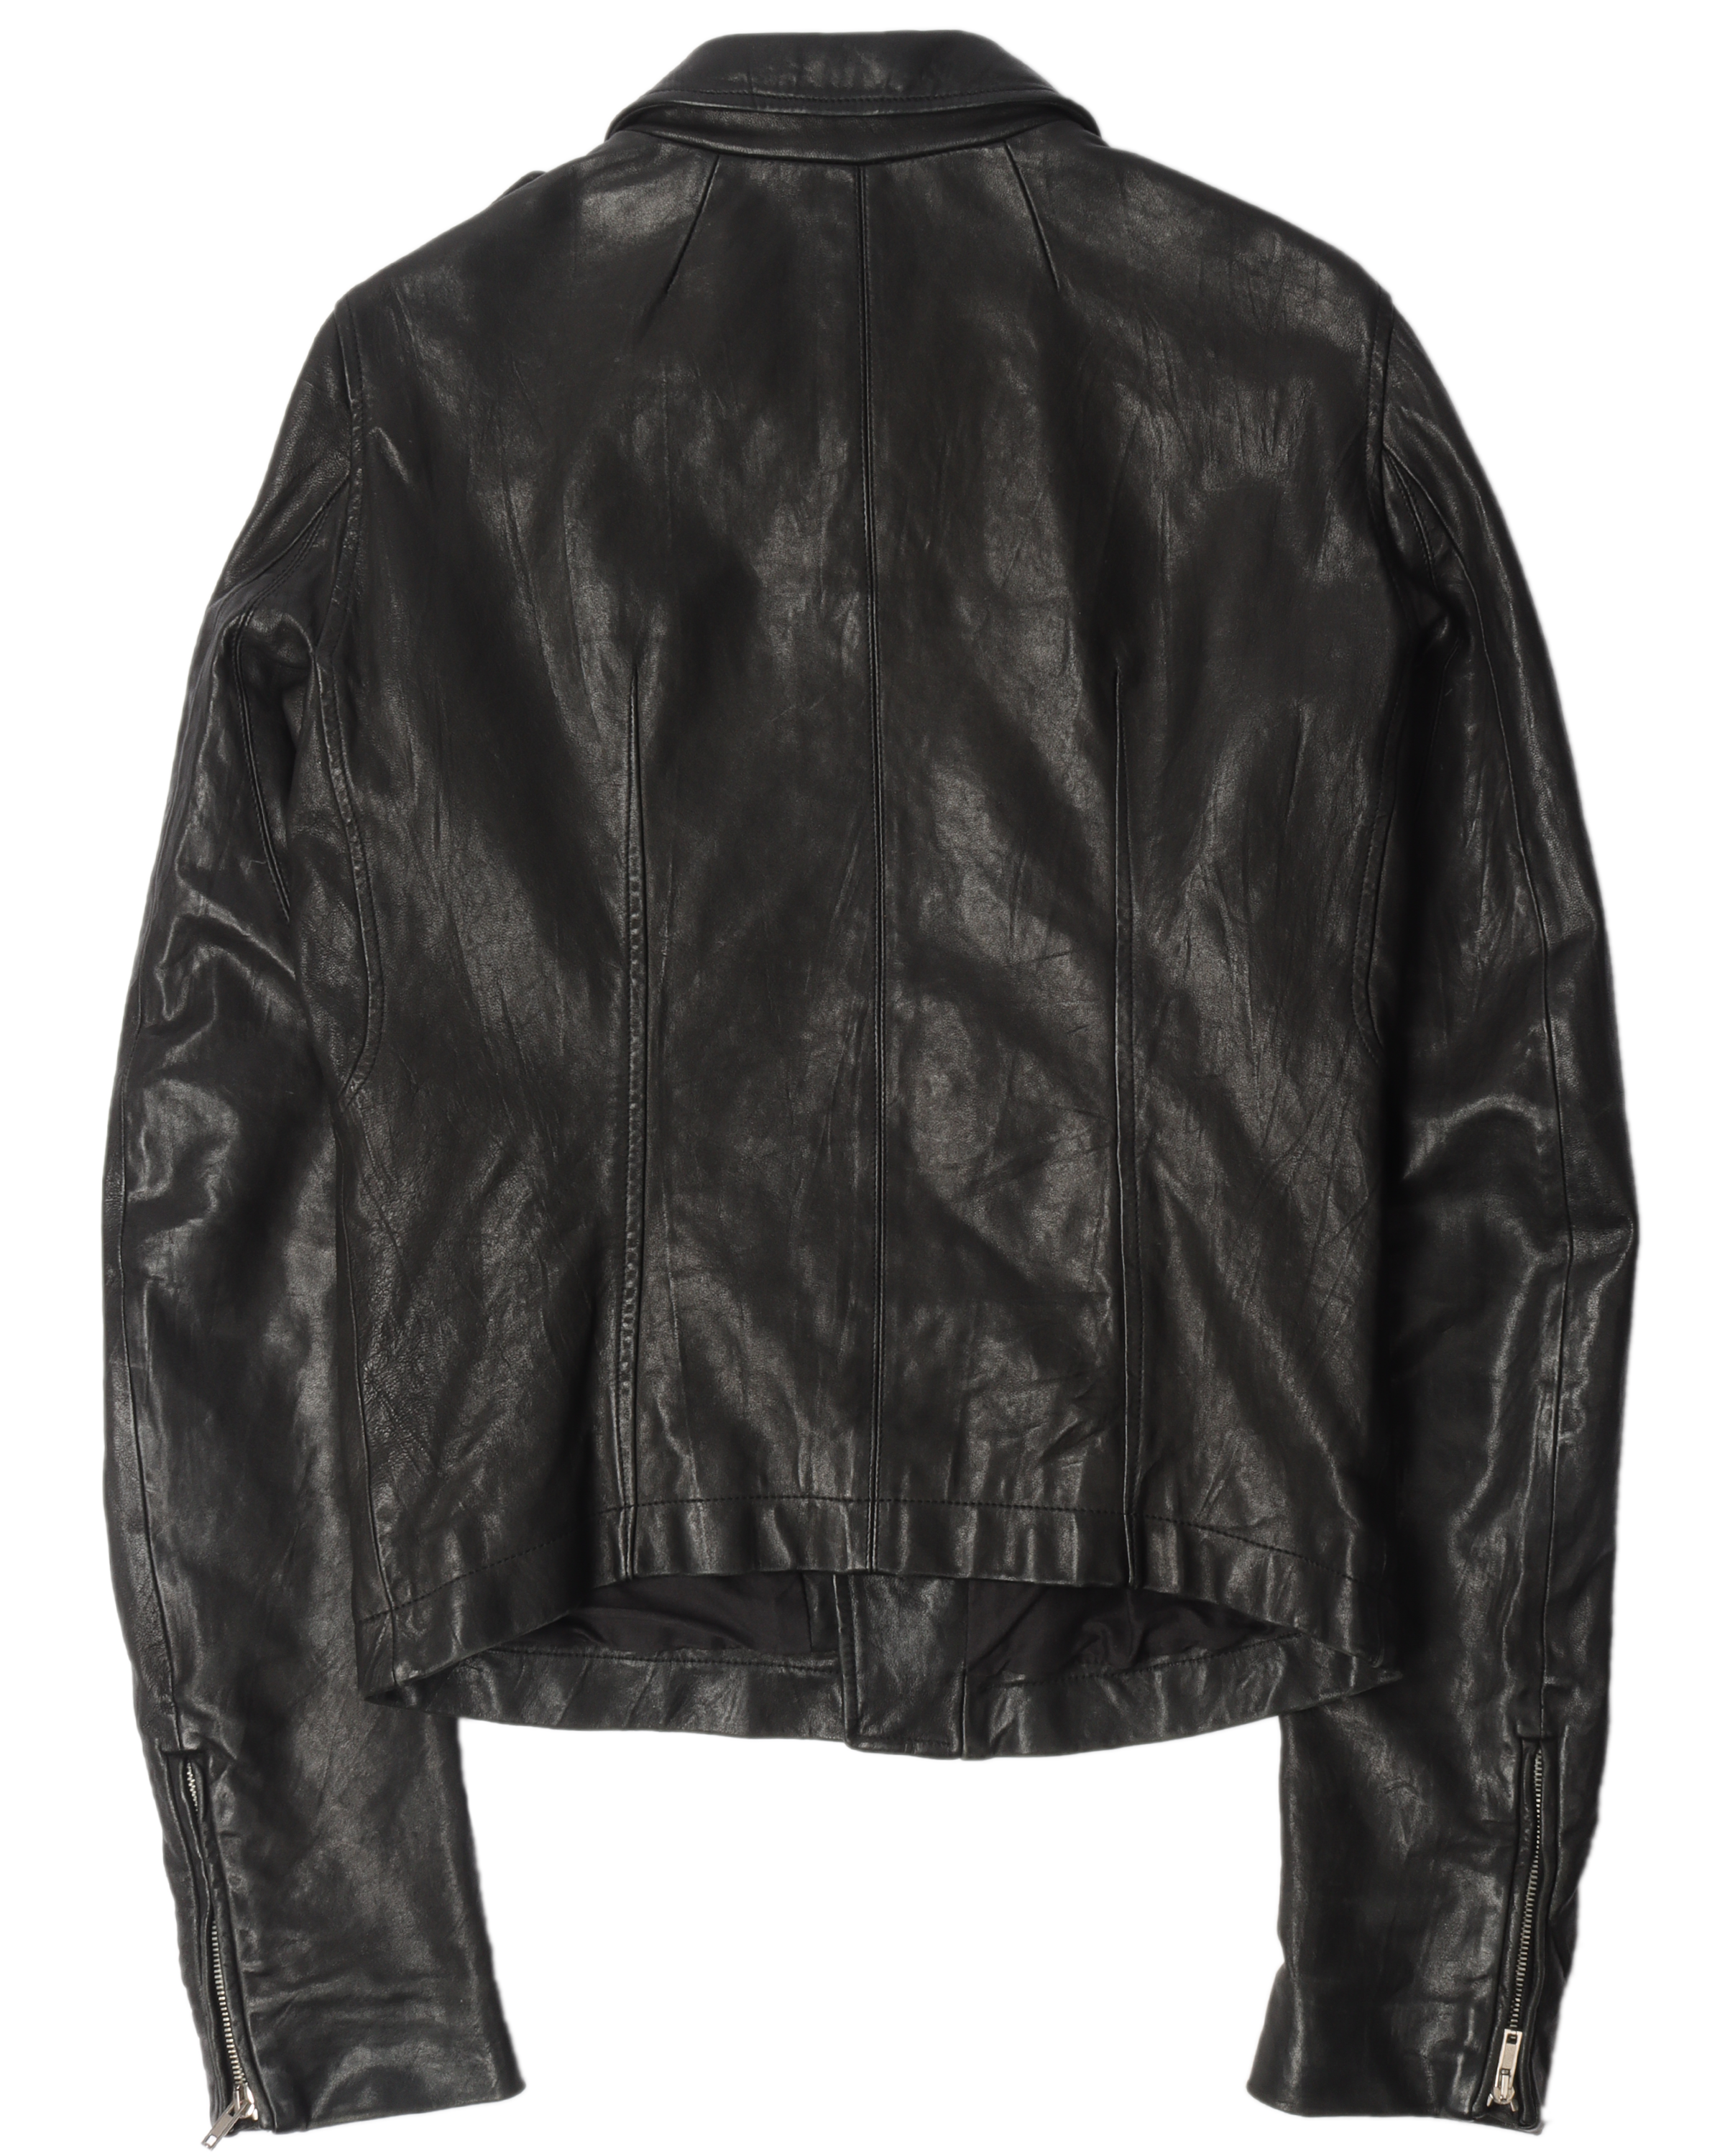 FW09 "CRUST" Hammered Lamb Leather Stooges Jacket